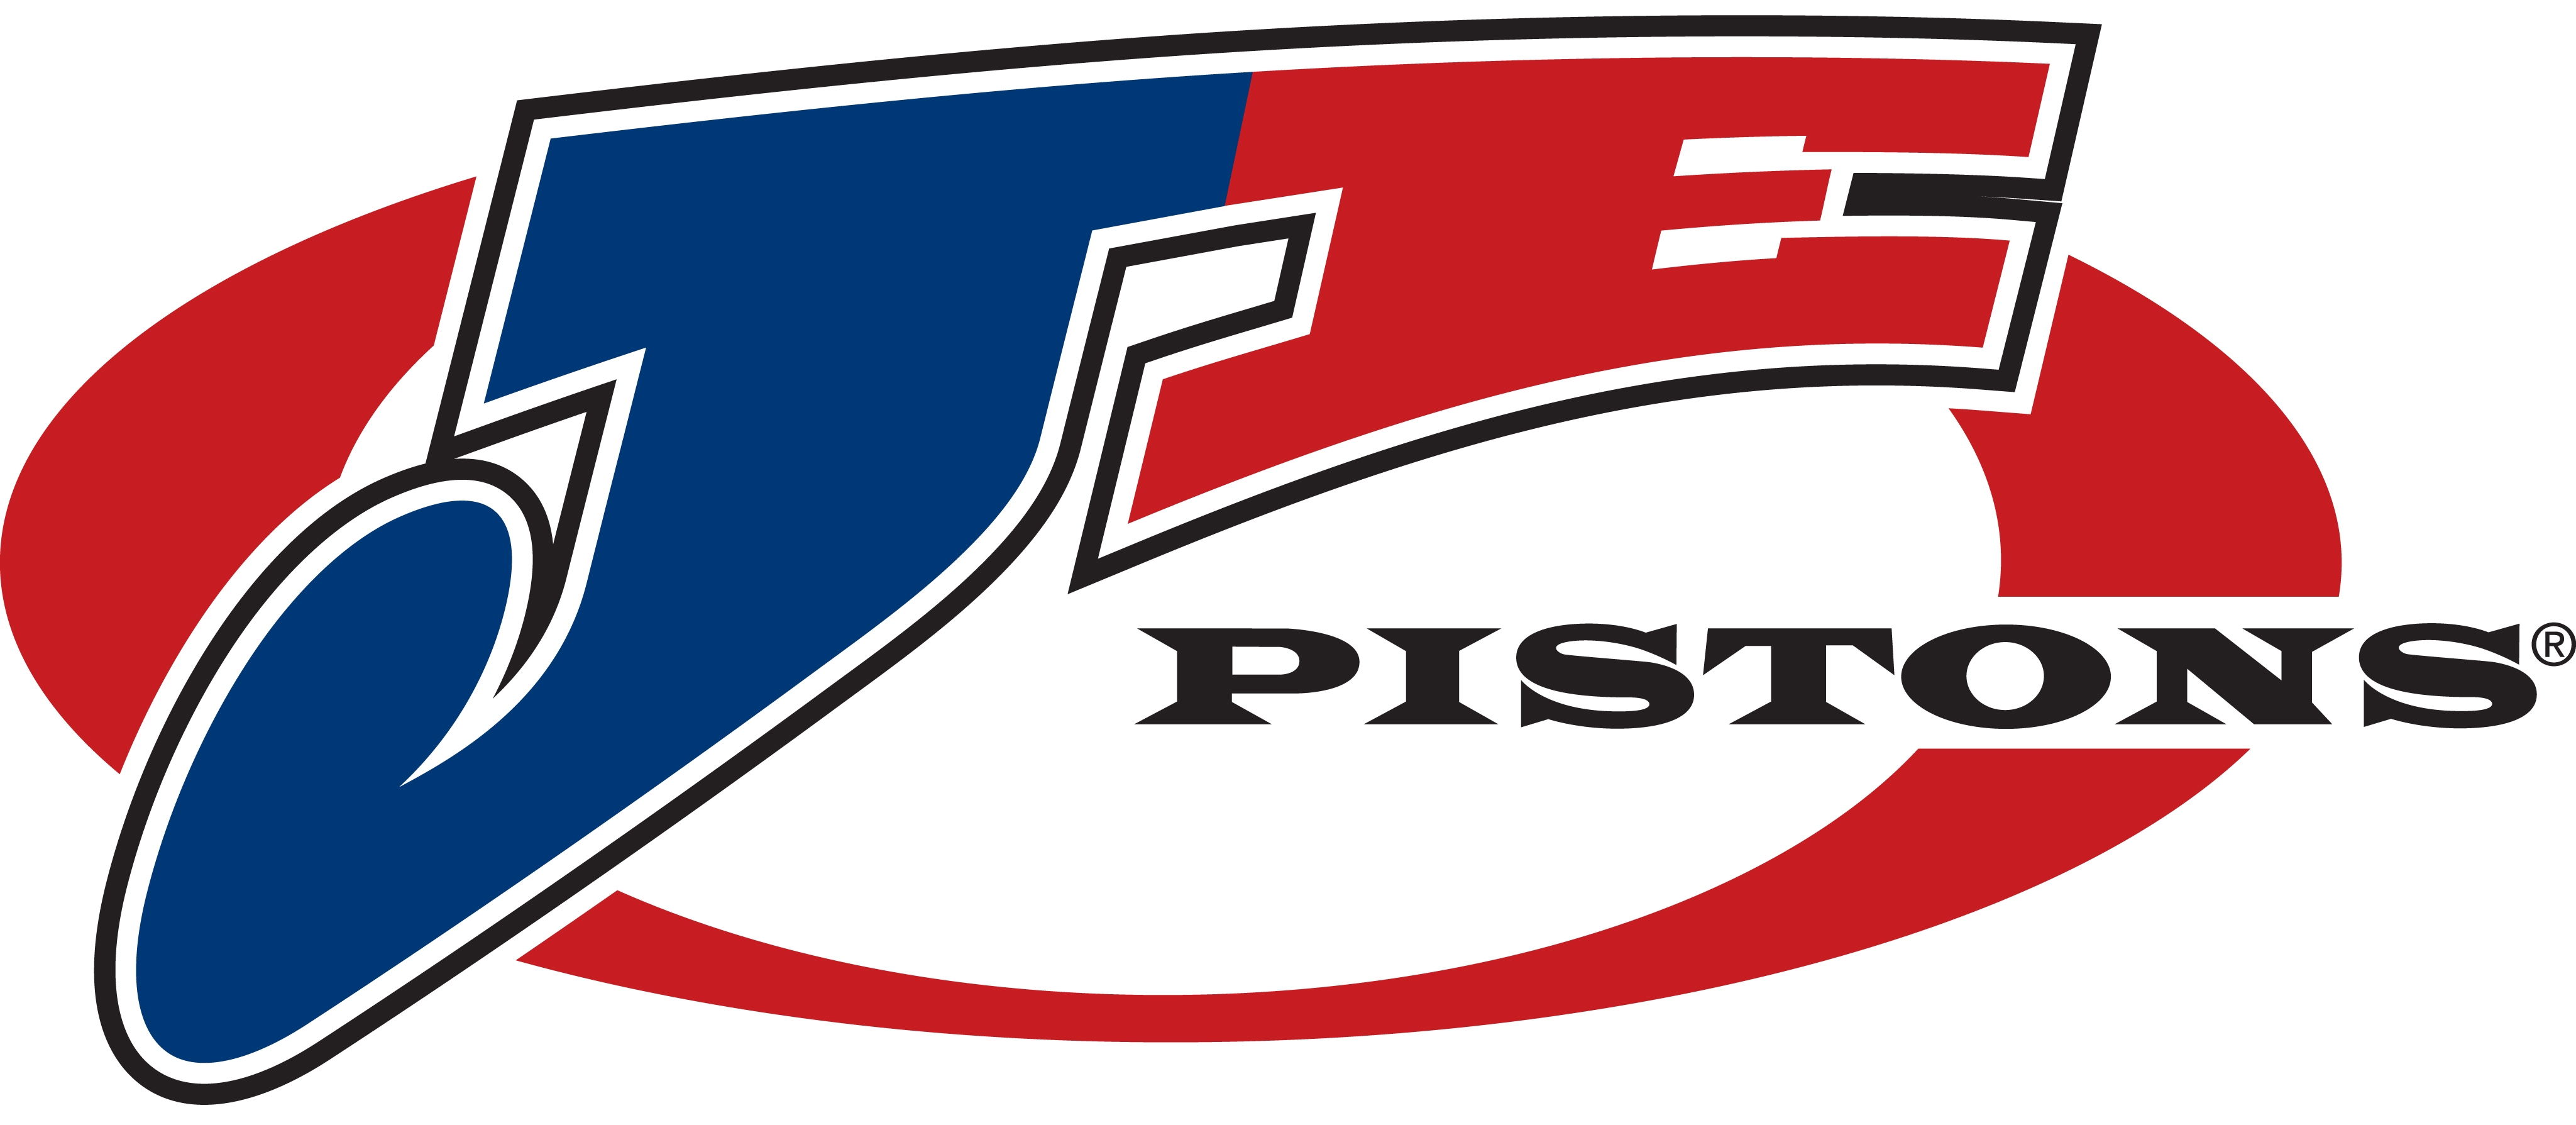 JE Pistons for Peugeot 205 1.6Ltr GTI 8V Engine type XU5JA  C/R: 12.0:1